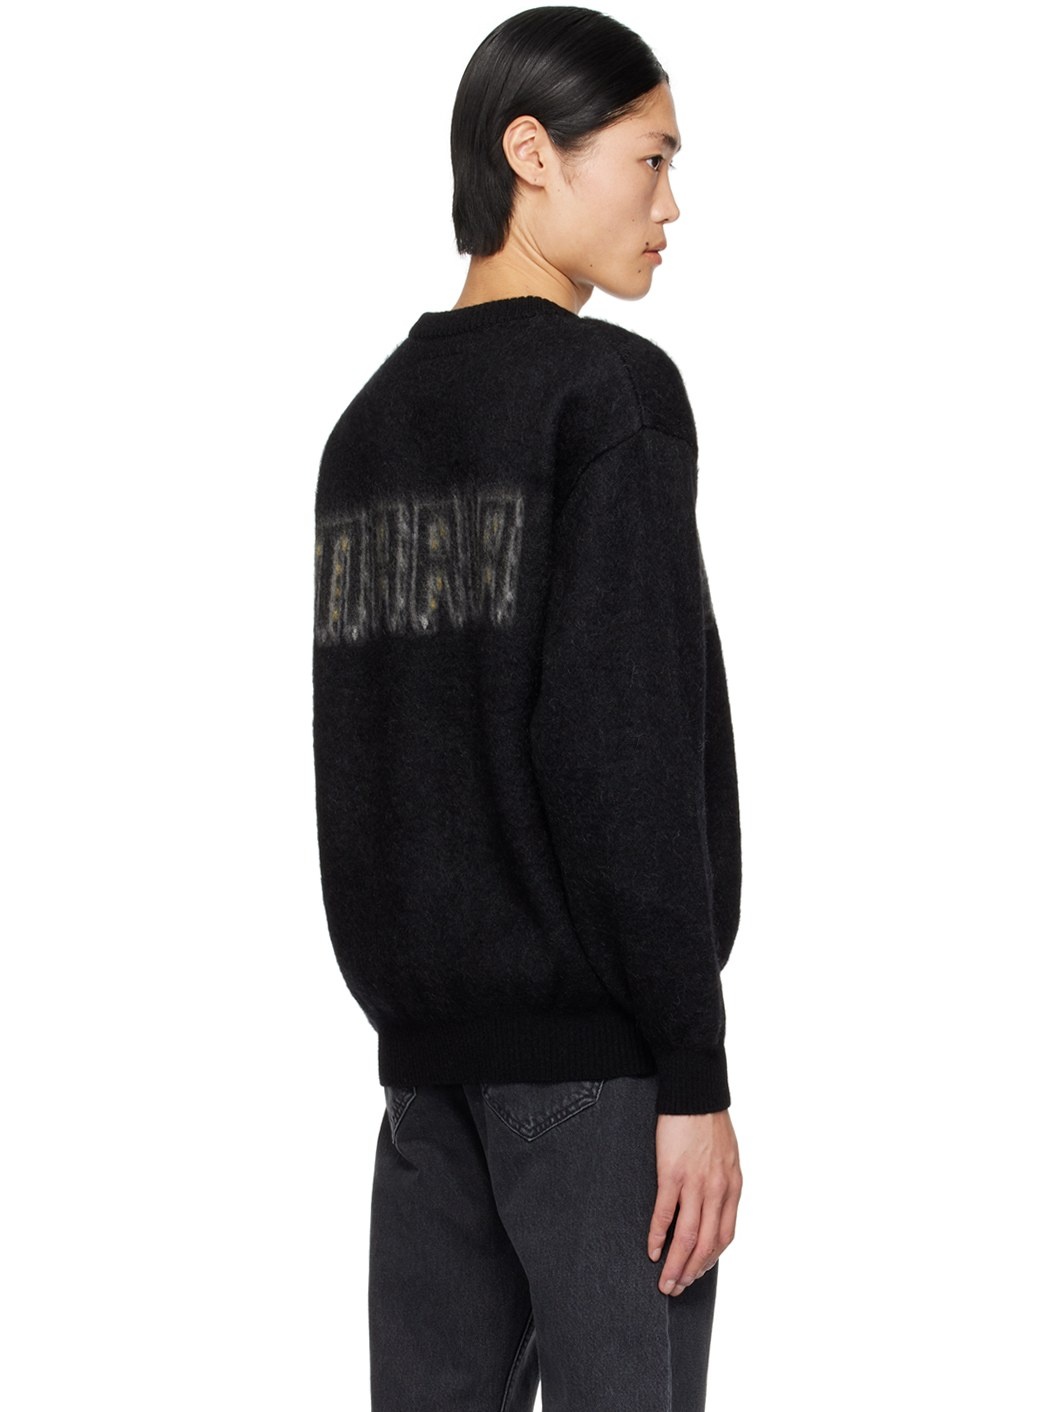 Black Brushed Sweater - 3